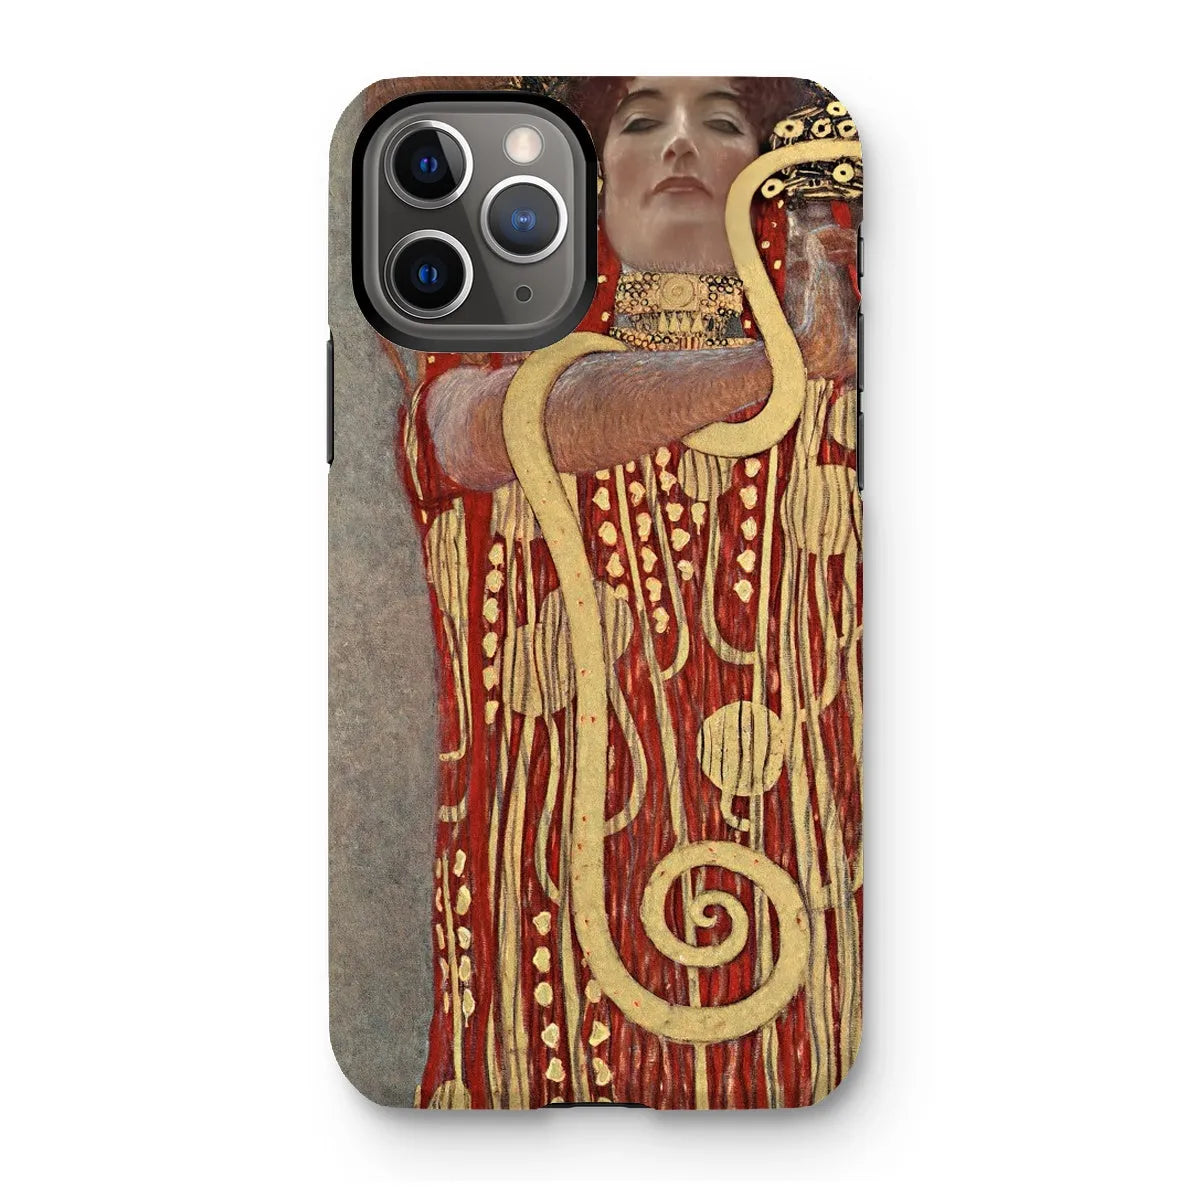 Hygieia - Vienna Succession Phone Case - Gustav Klimt - Iphone 11 Pro / Matte - Mobile Phone Cases - Aesthetic Art